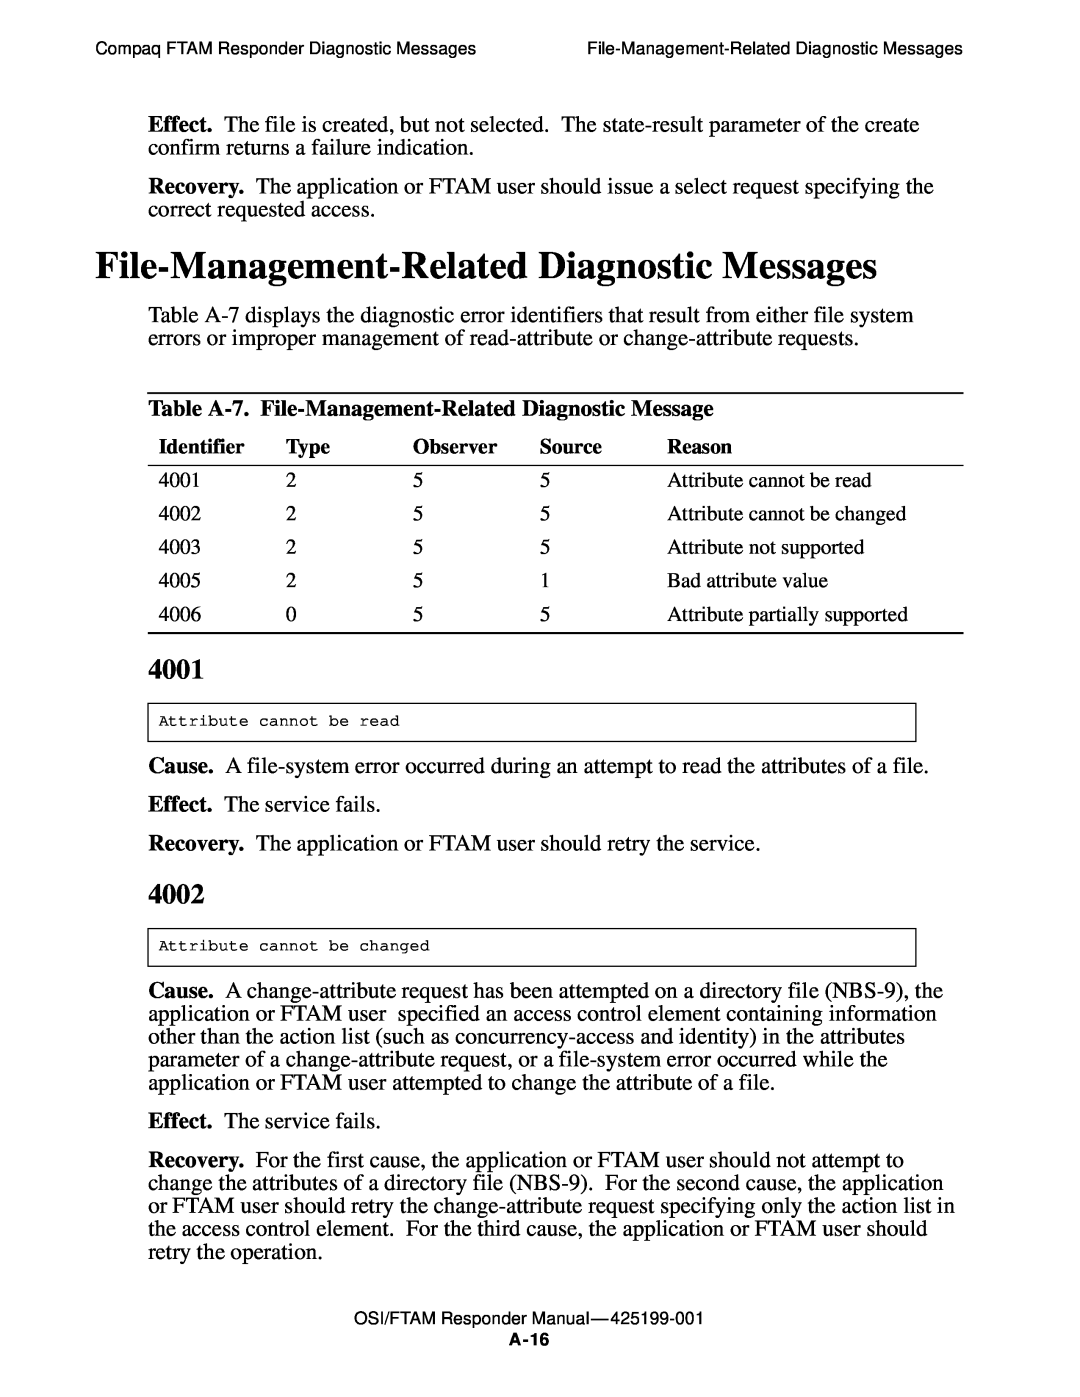 Compaq OSI/APLMGR D43, OSI/FTAM D43 manual File-Management-Related Diagnostic Messages, 4001, 4002 